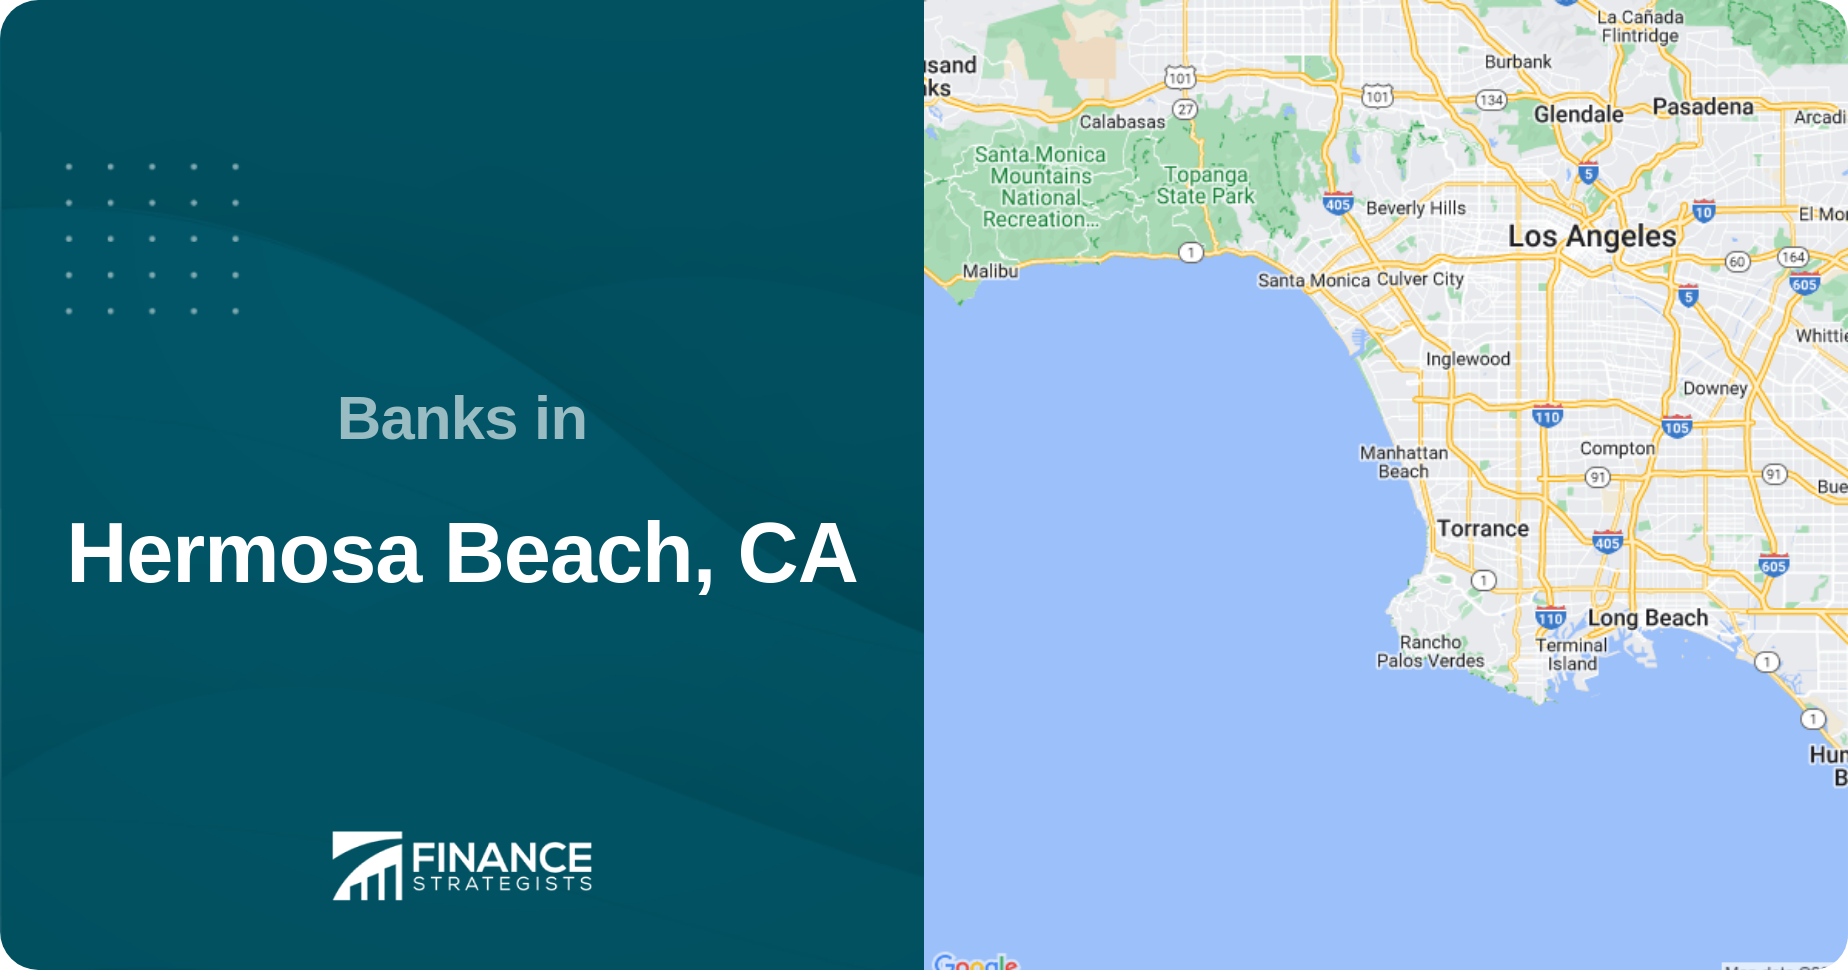 Banks in Hermosa Beach, CA